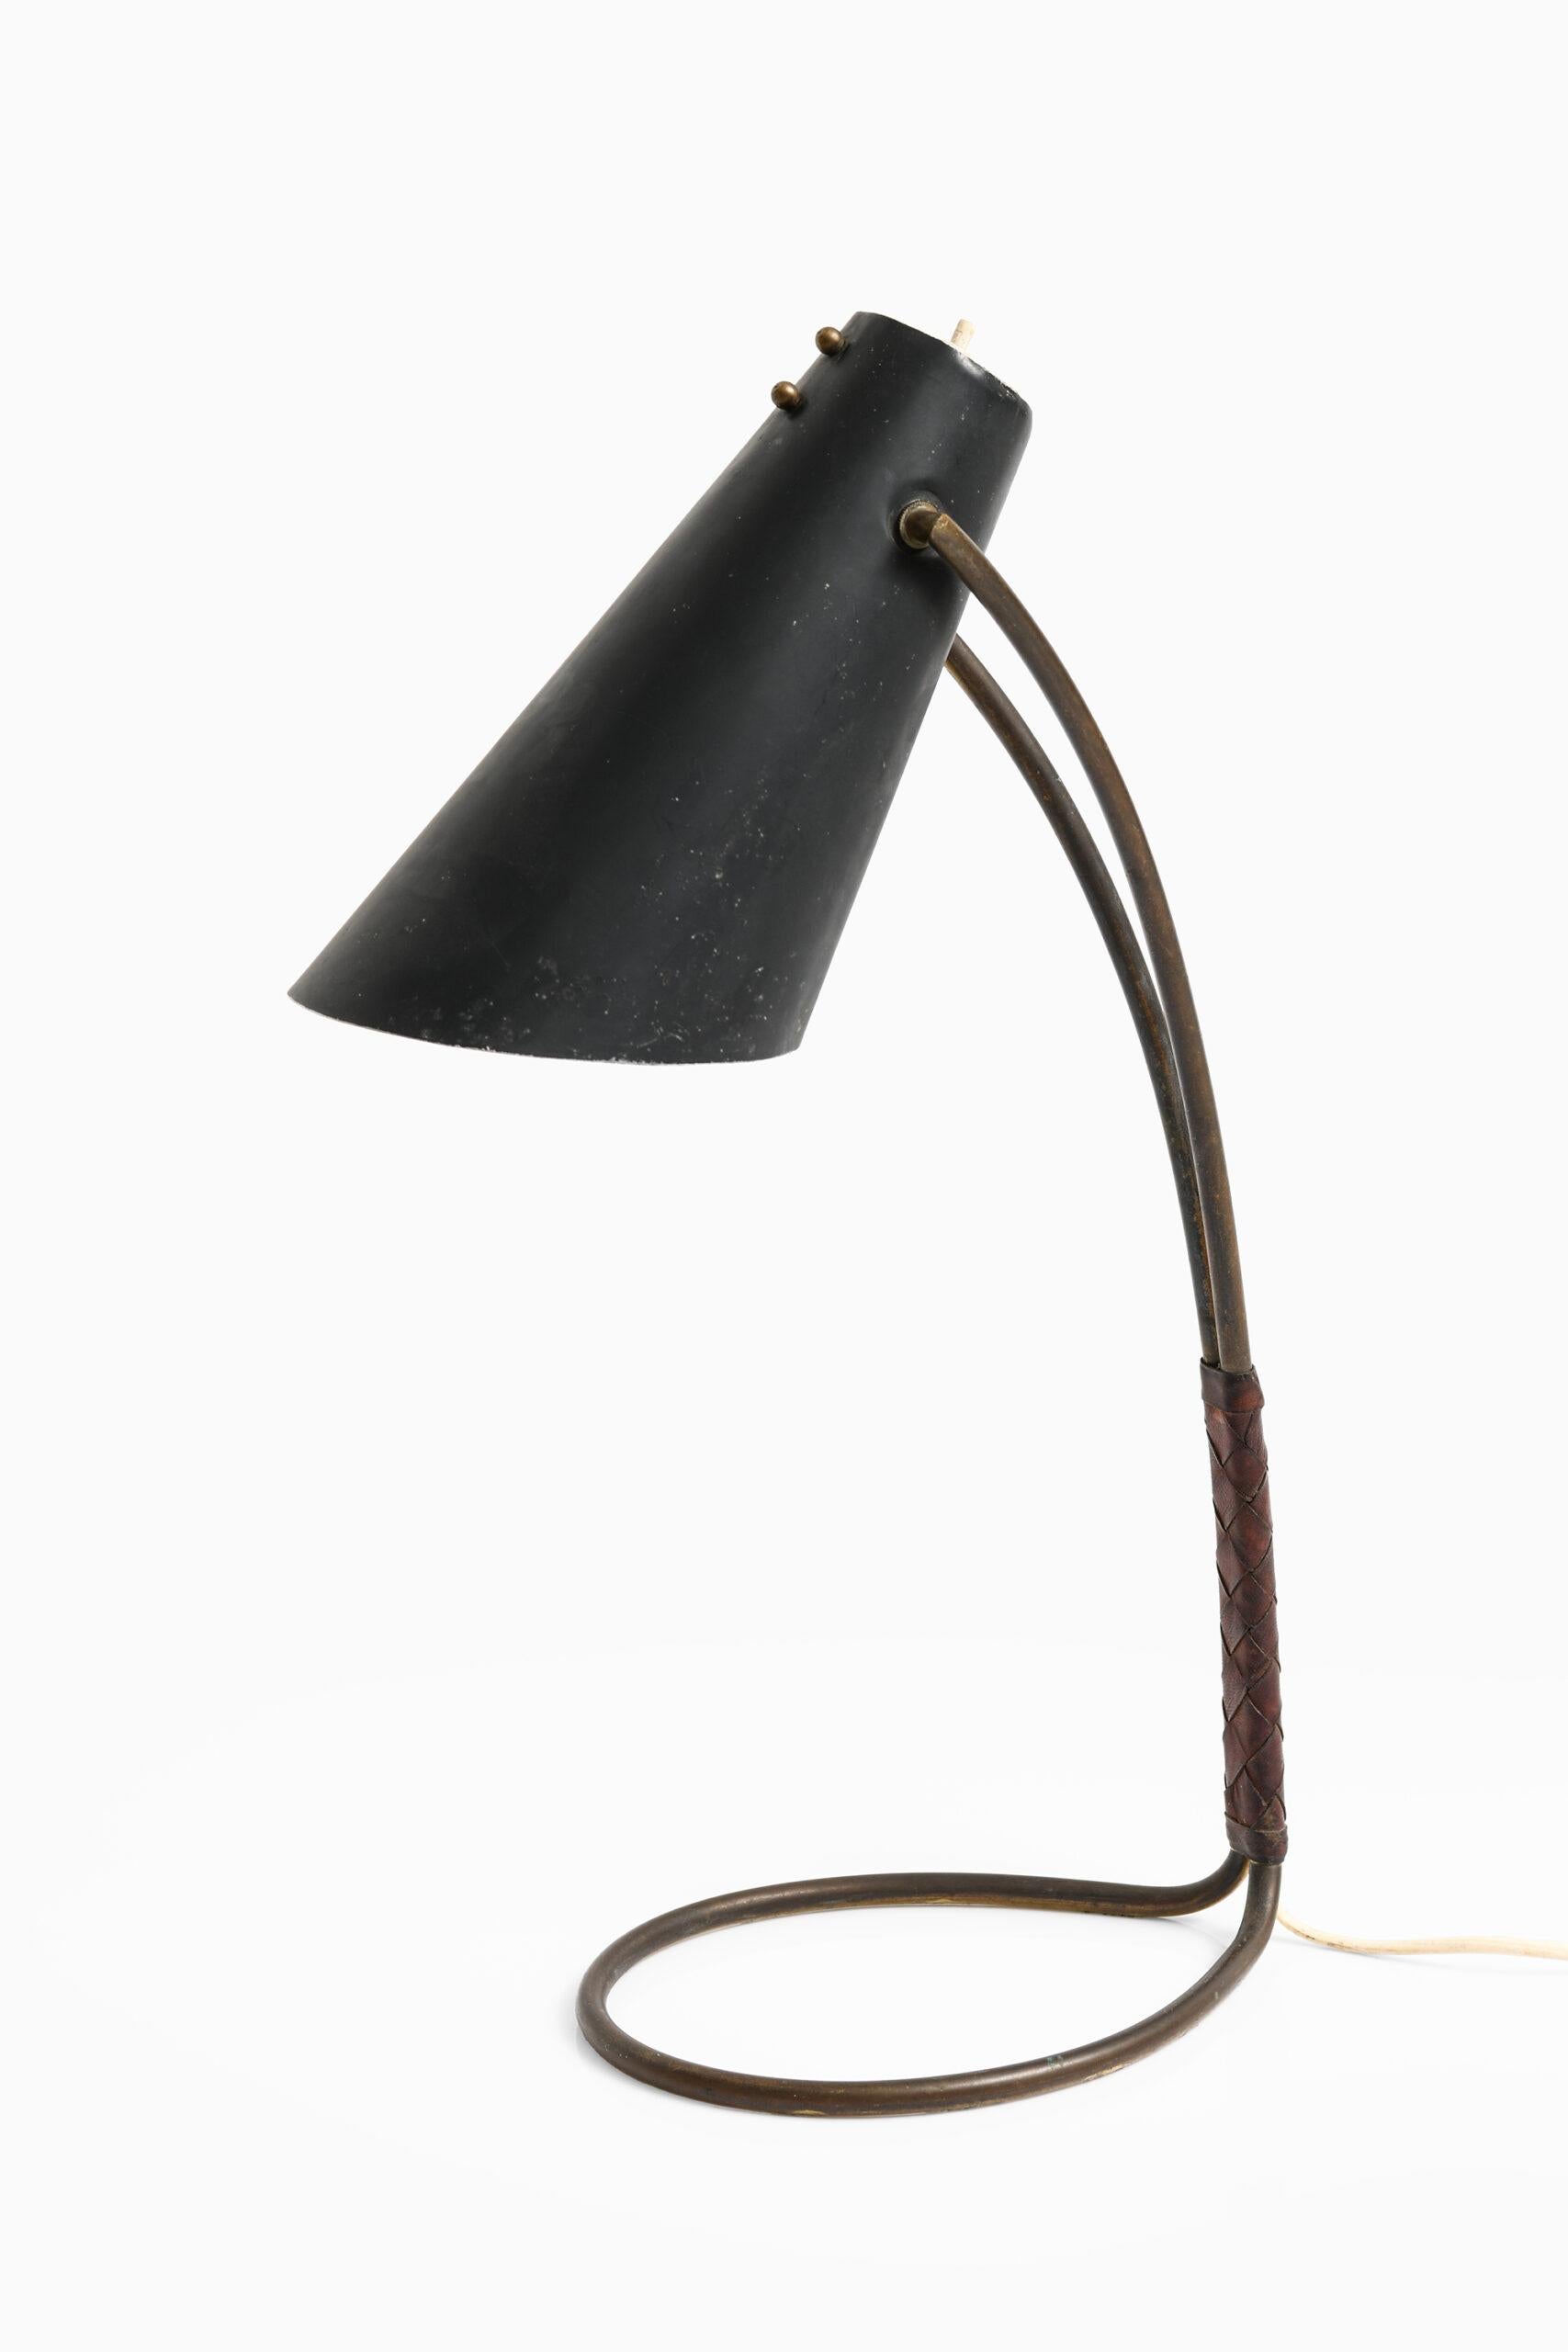 Rare table lamp designed by Svend Aage Holm Sørensen. Produced by Holm Sørensen & Co in Denmark.